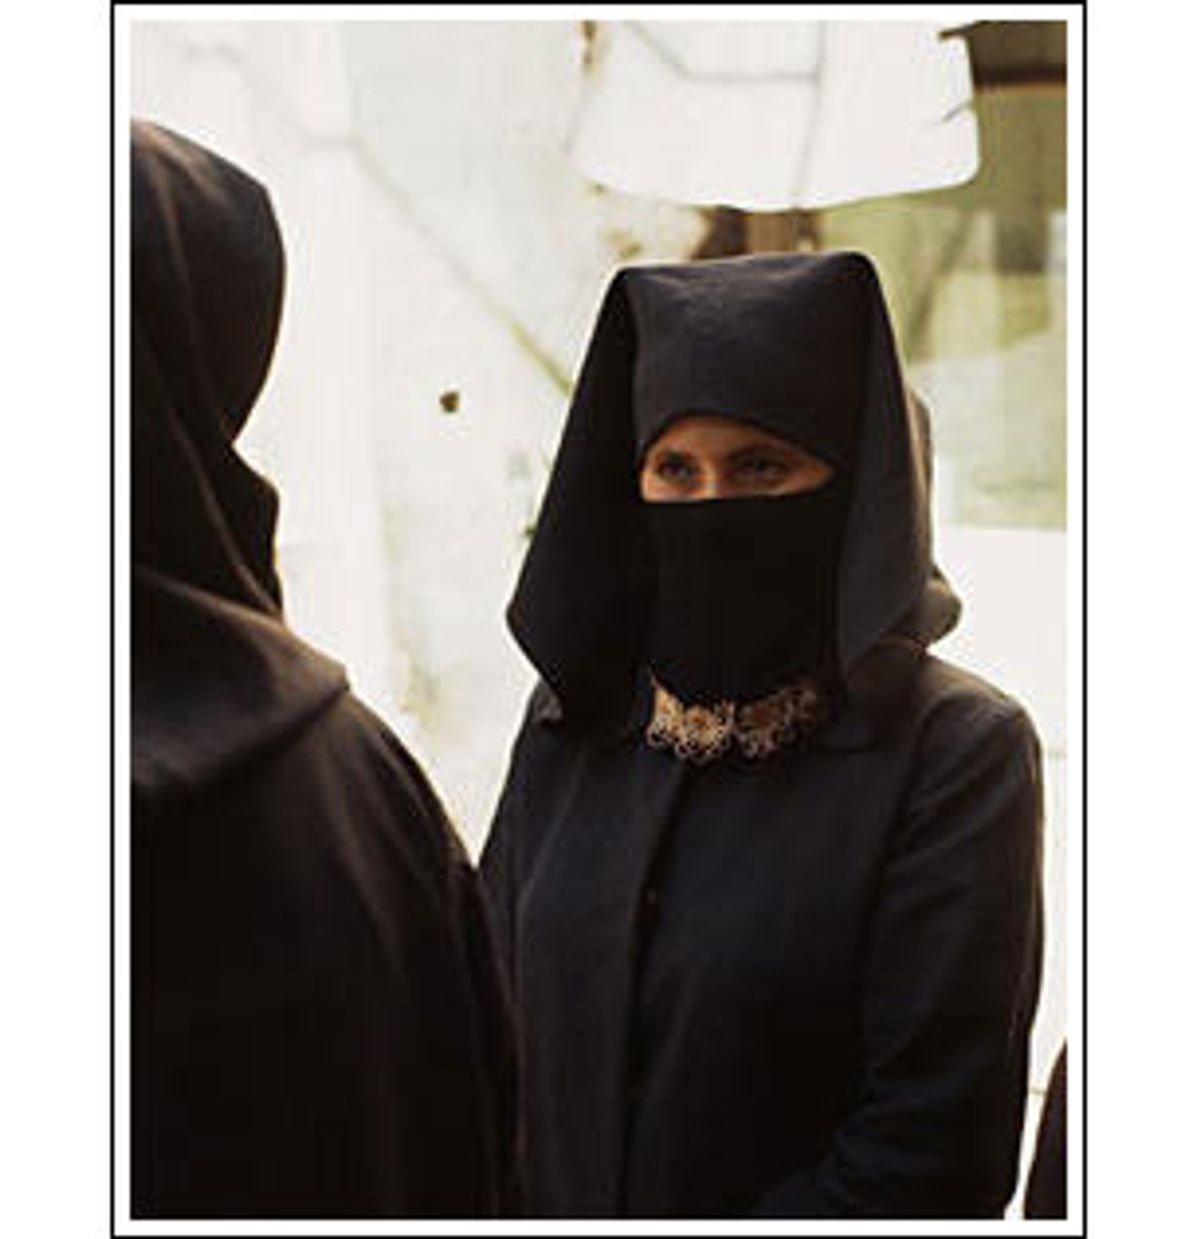 Under the veils in Casablanca | Salon.com